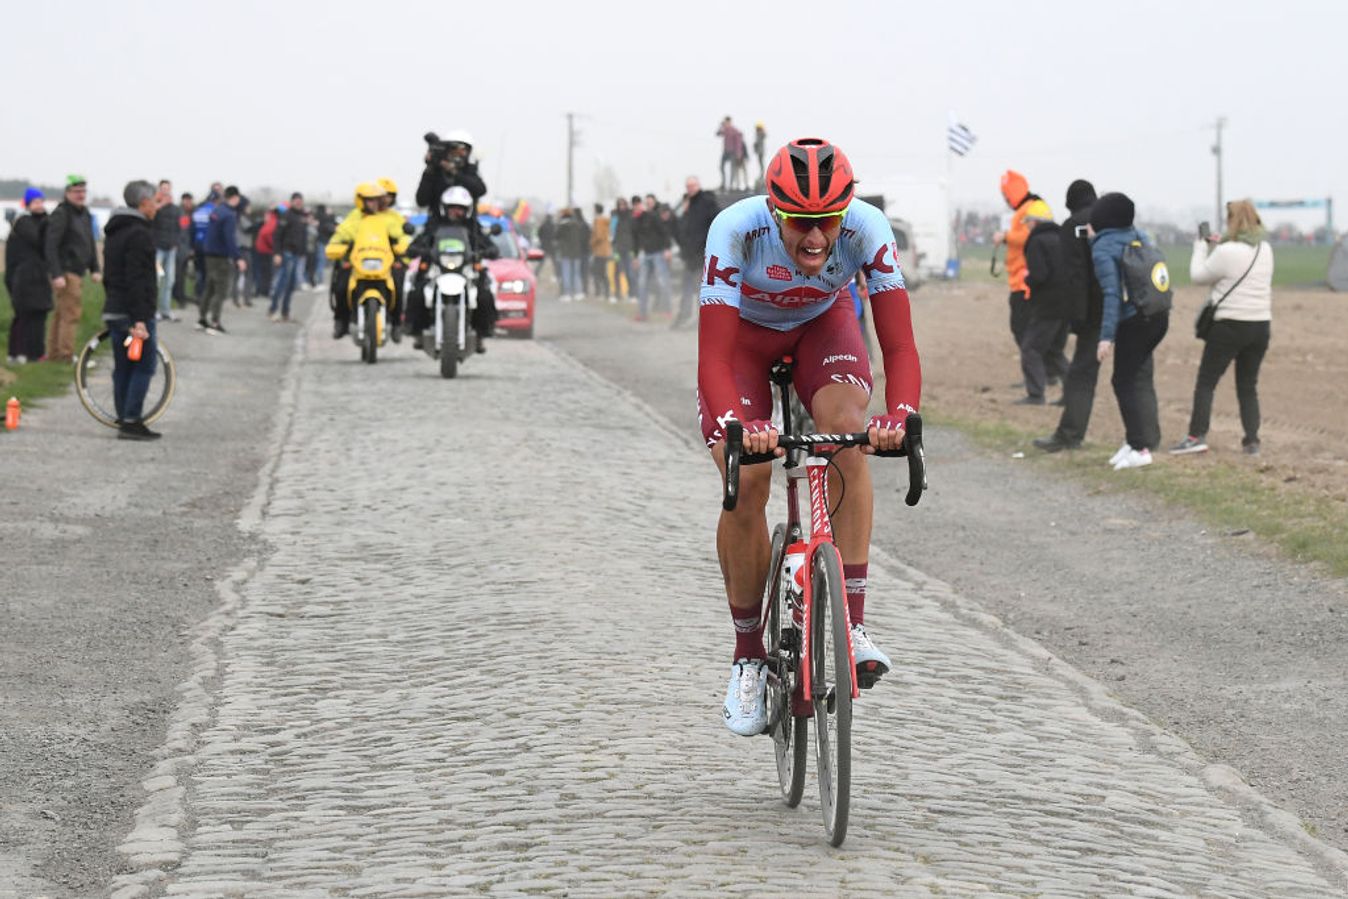 Nils Politt has been runner-up in Paris-Roubaix before, finishing behind Philippe Gilbert in 2019